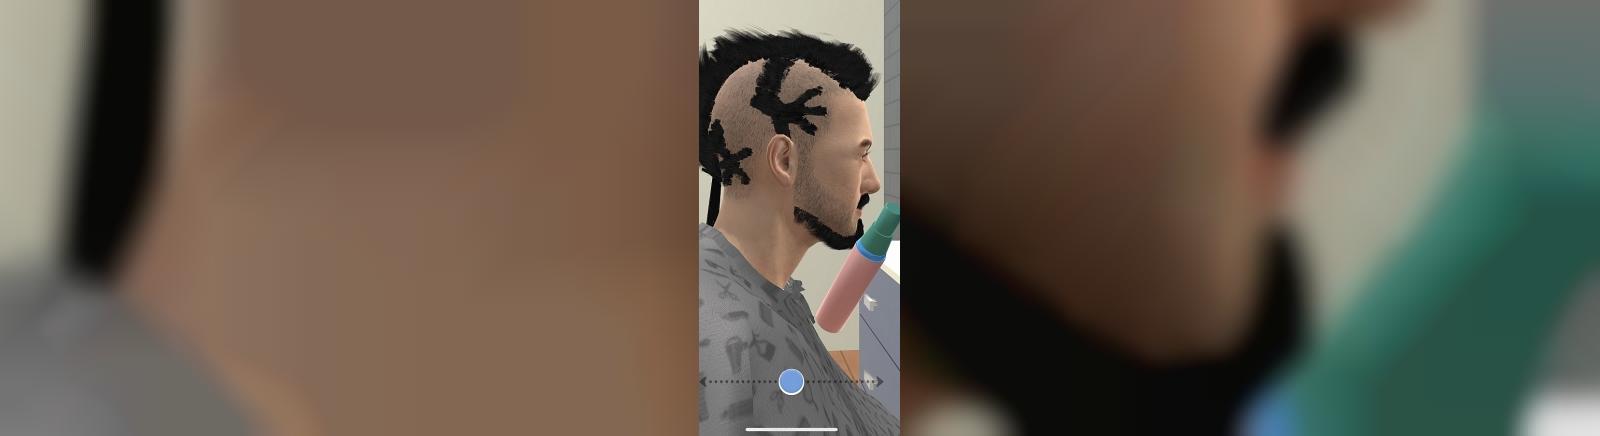 Дата выхода Real Haircut 3D  на iOS и Android в России и во всем мире